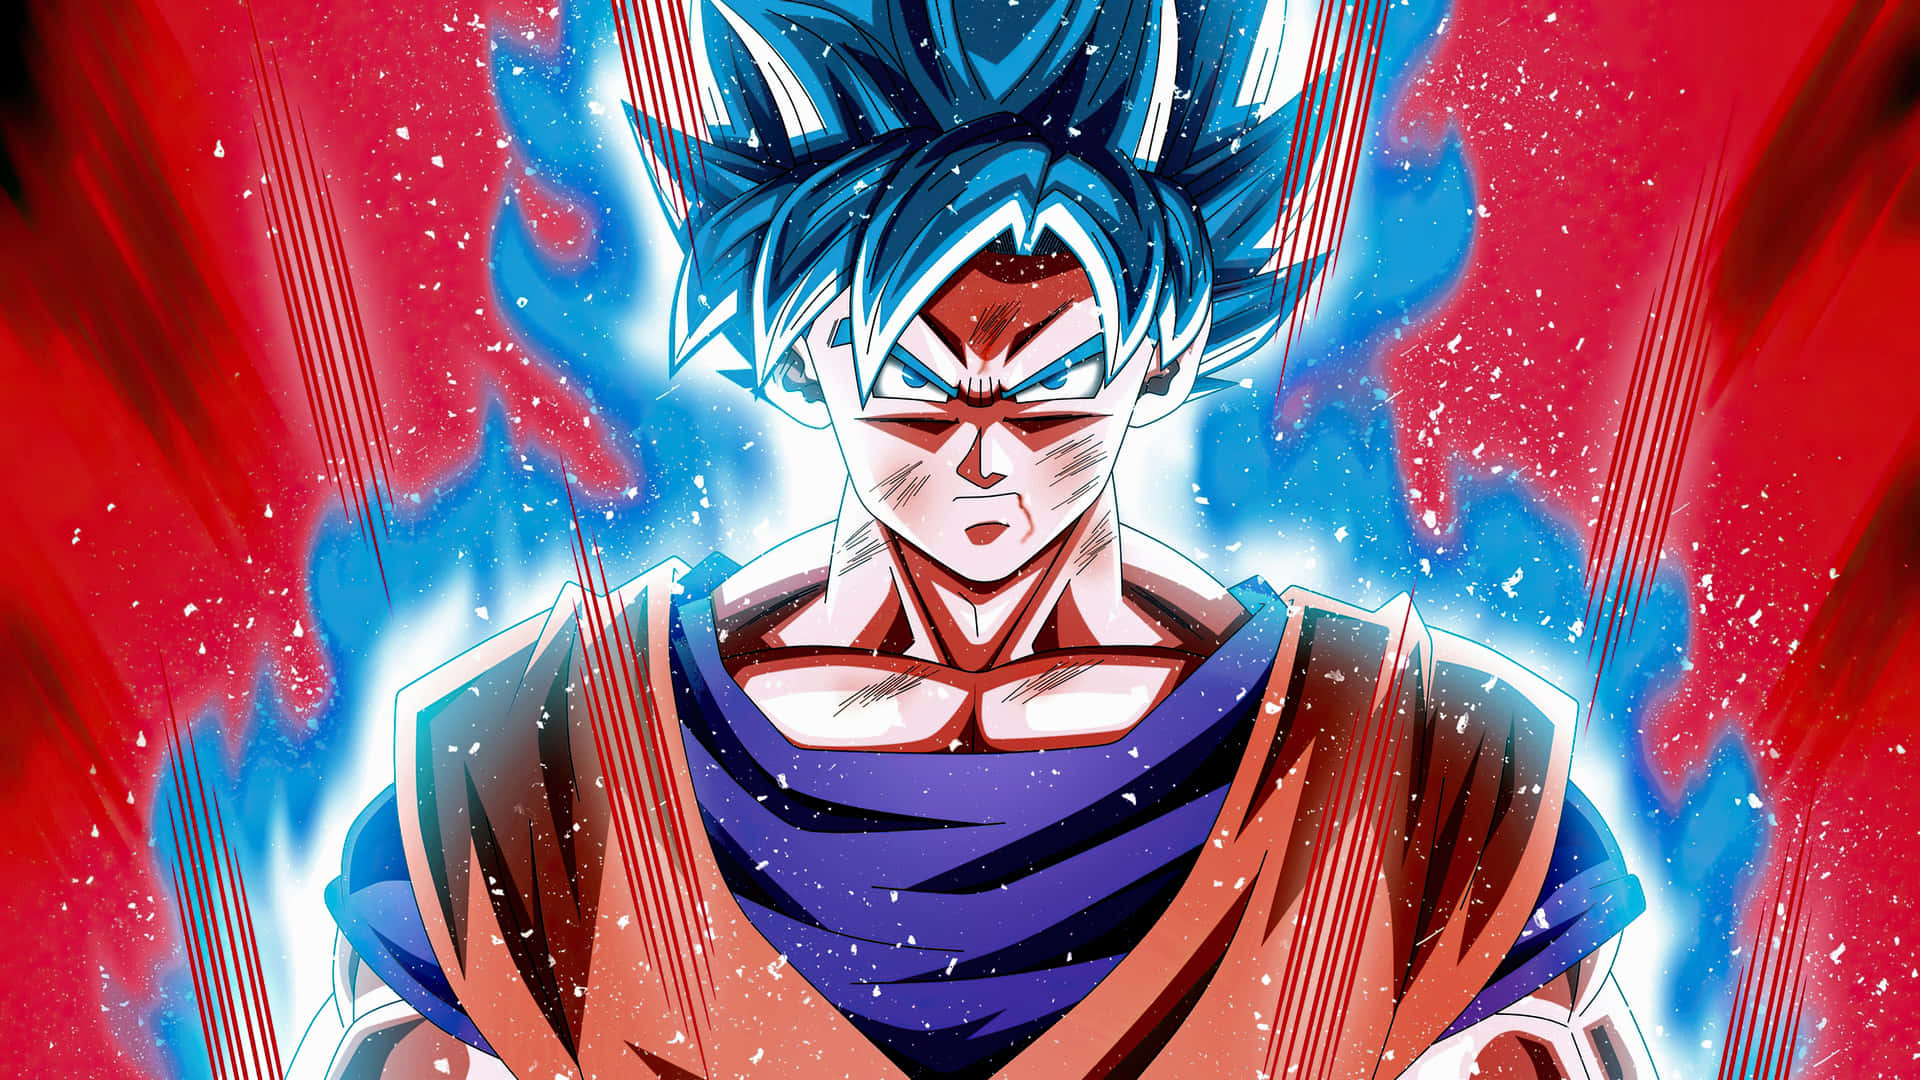 Blue Anime Background Goku From Dragon Ball